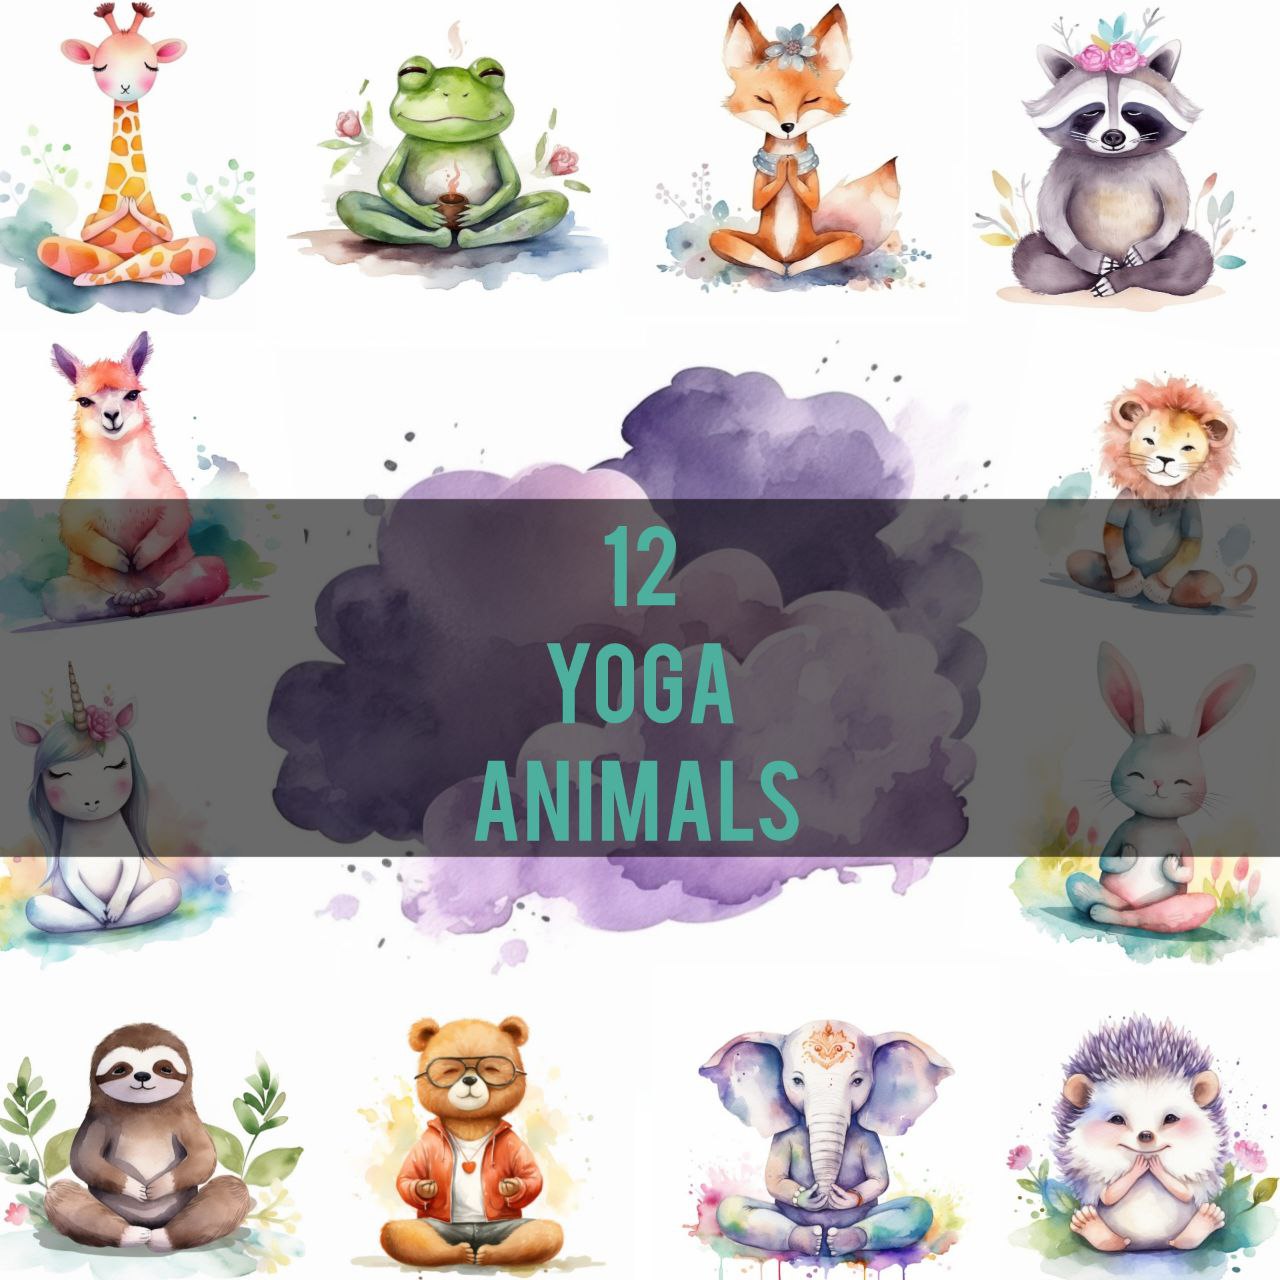 12 Watercolor Yoga Animals| Giraffe, frog, fox, lama, sloth, bear, hedgehog, bunny, lion, unicorn, elephant preview image.